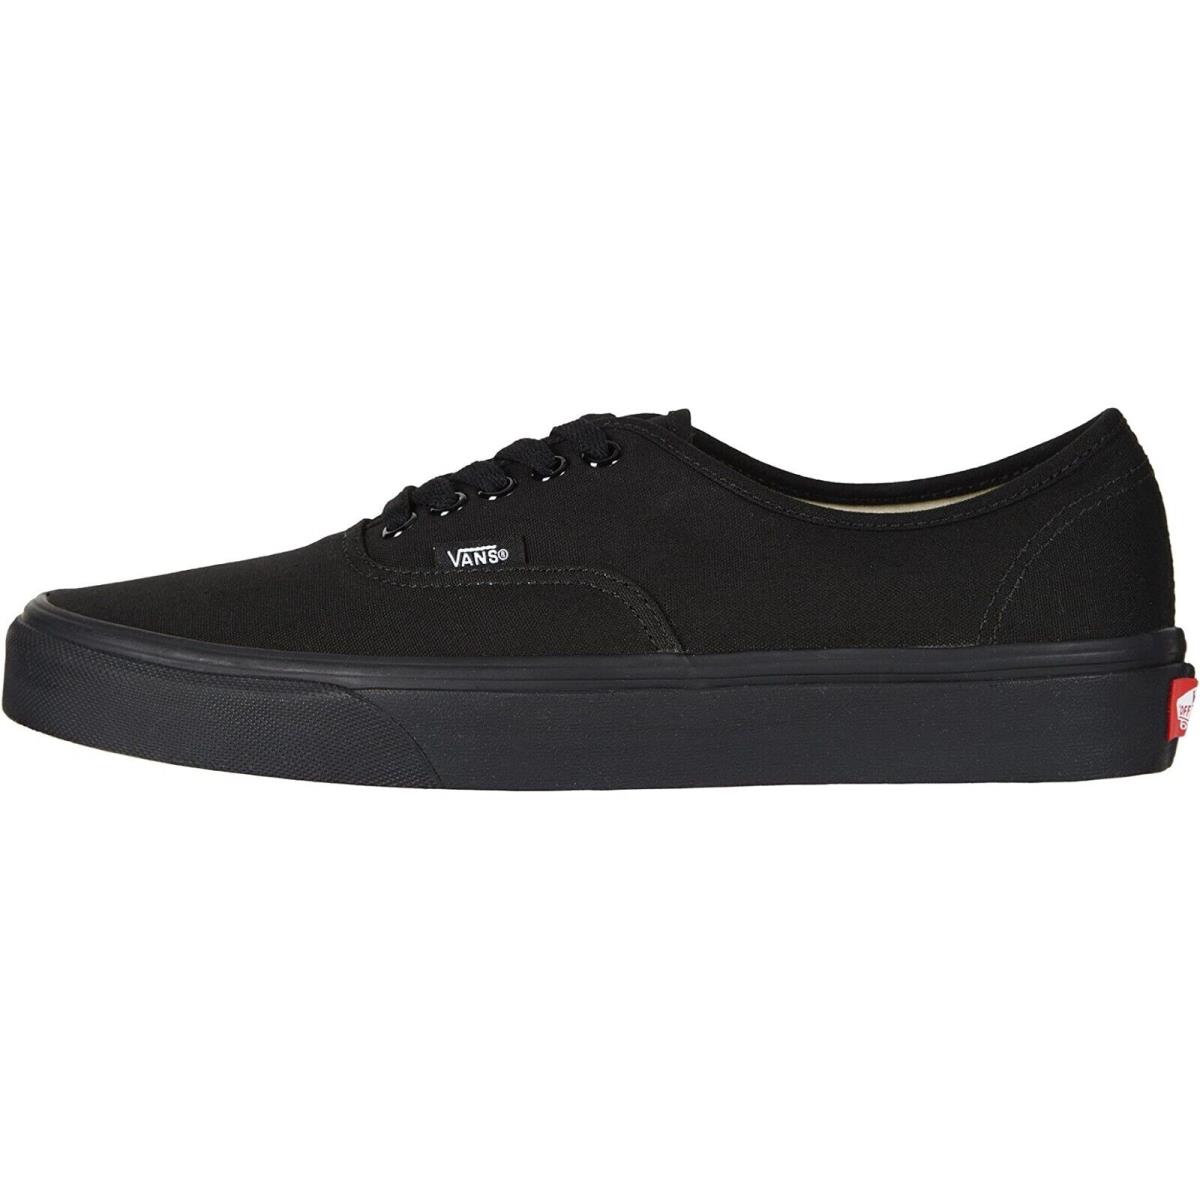 Vans Unisex Mens Womens Canvas Sneakers Skate Shoes Black/Black